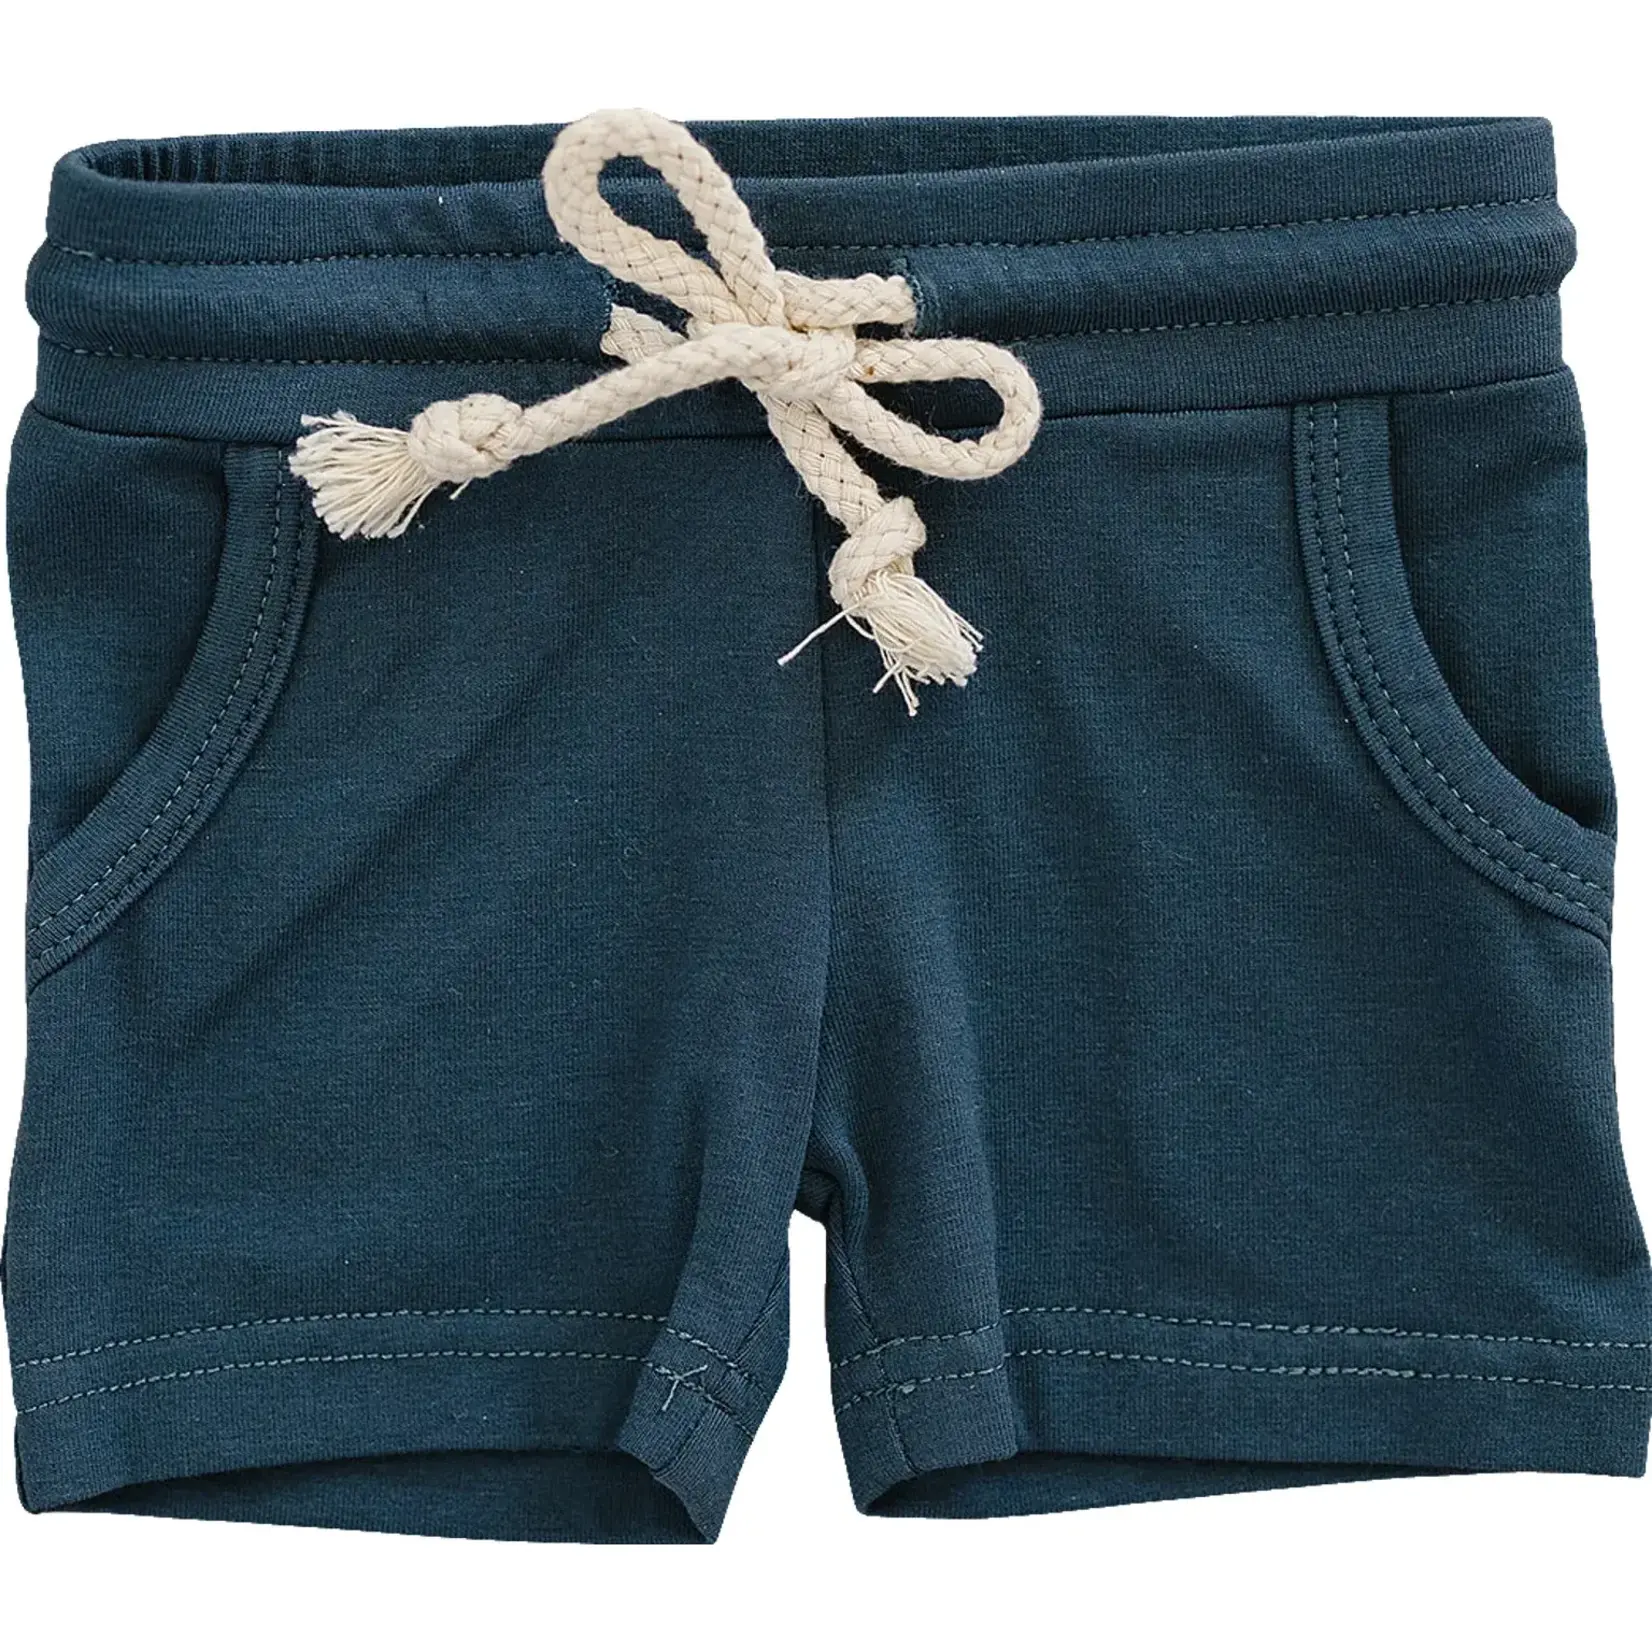 Mebie Baby Navy Pocket Cotton Shorts